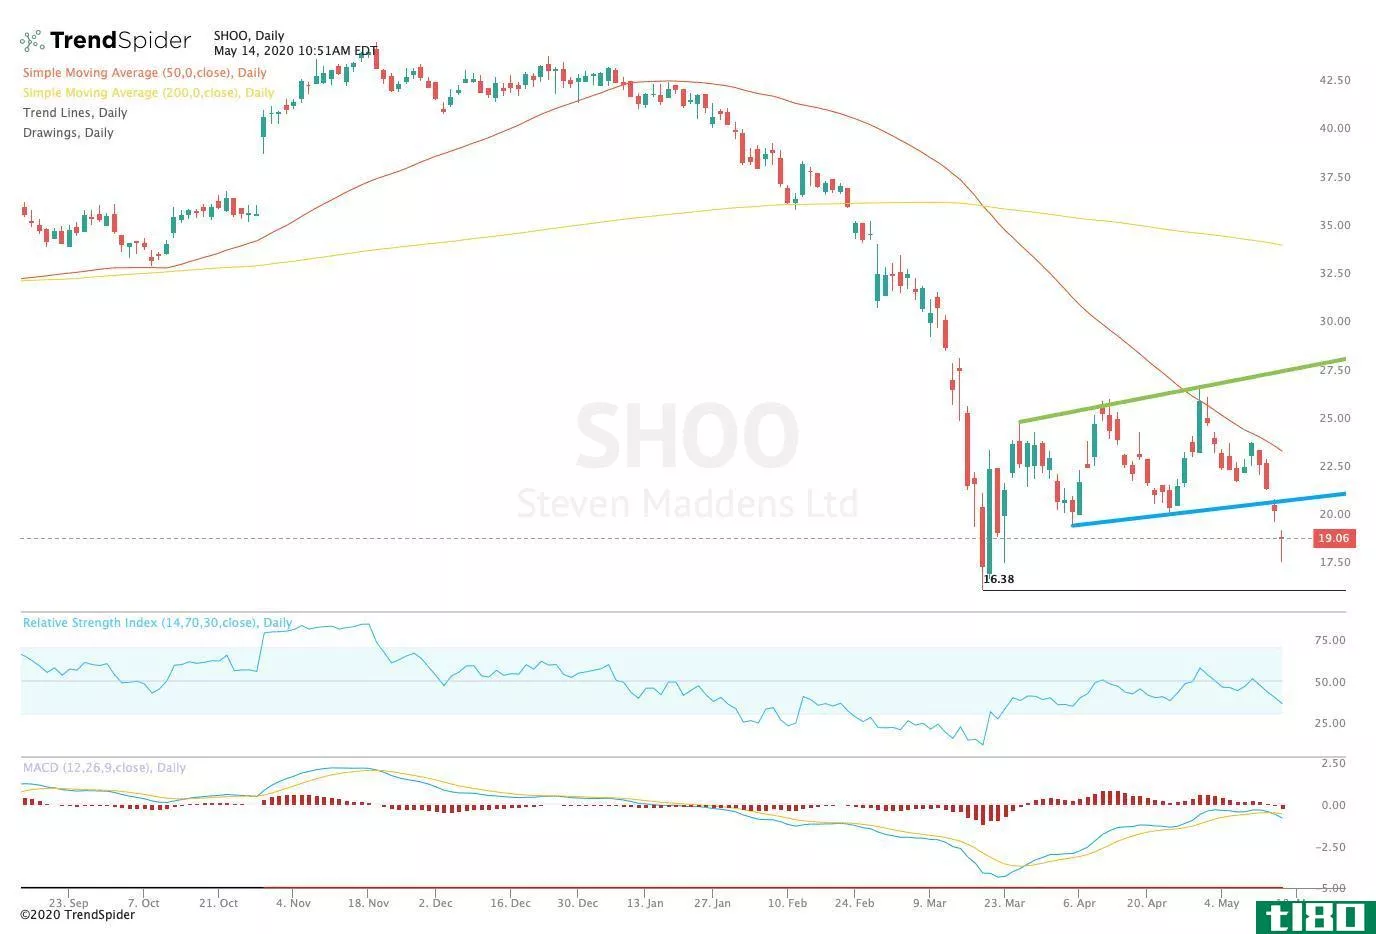 Chart showing the share price performance of Steven Madden, Ltd. (SHOO)